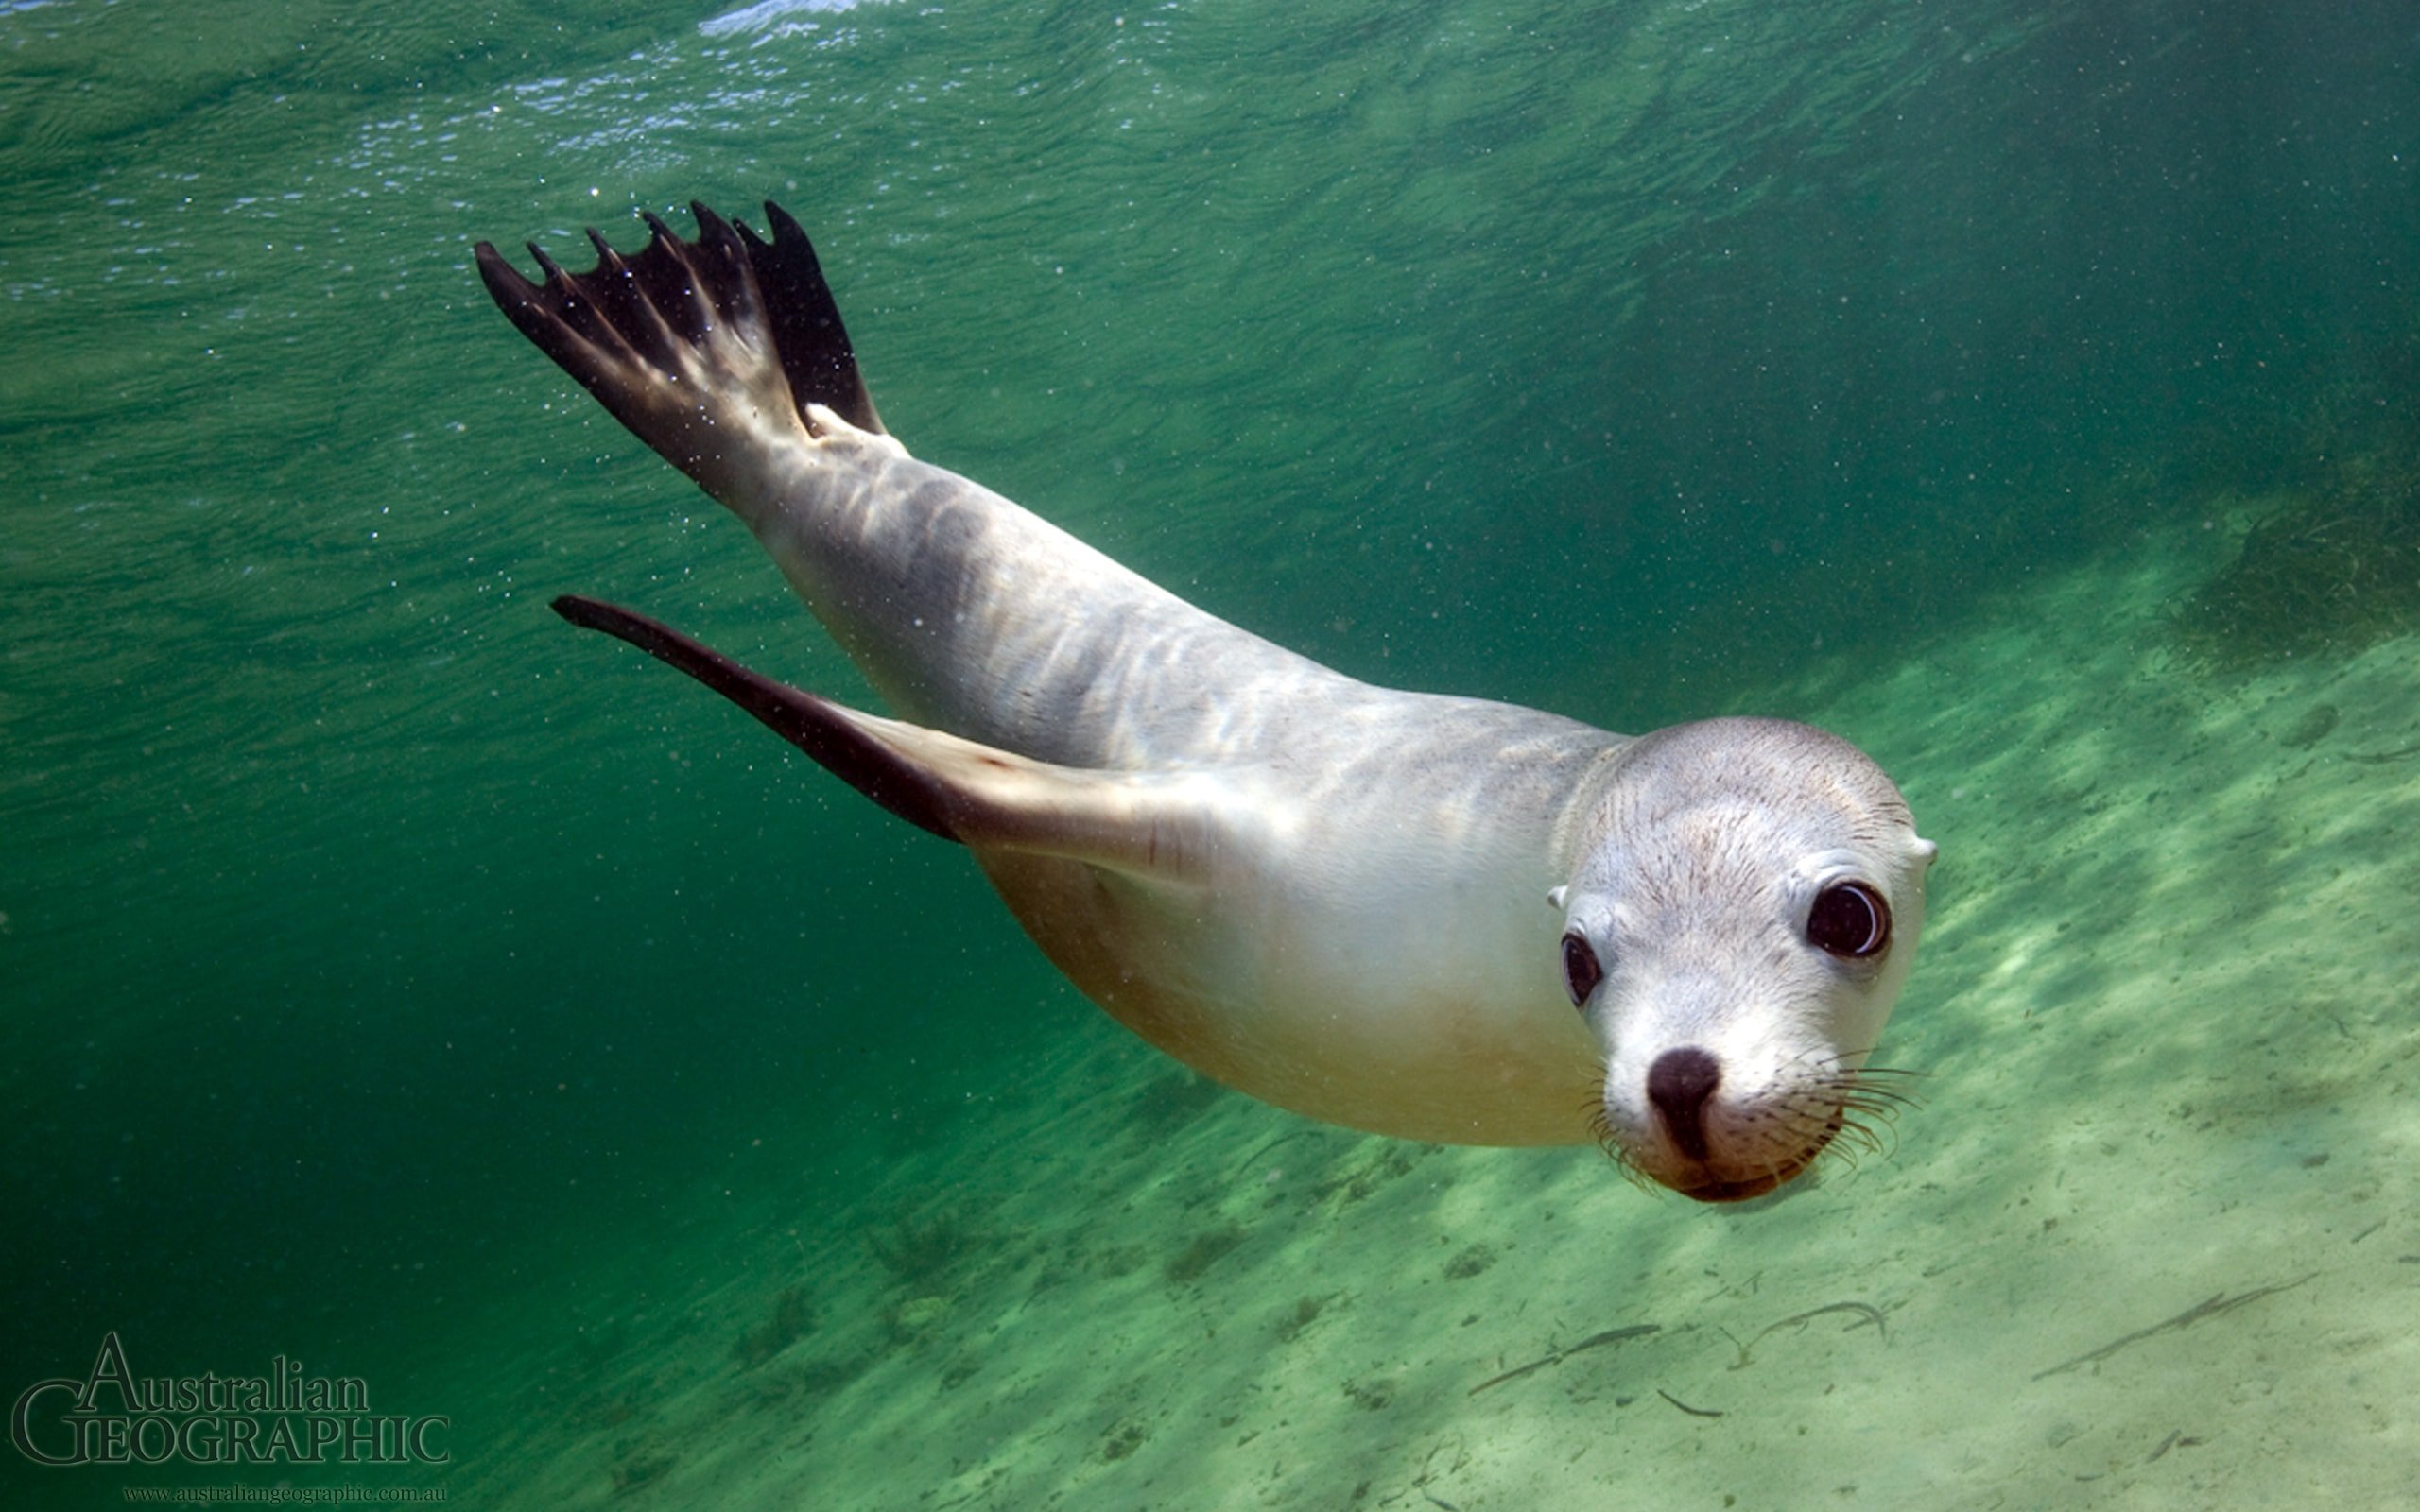 Sea lion, South Australia Australian Geographic